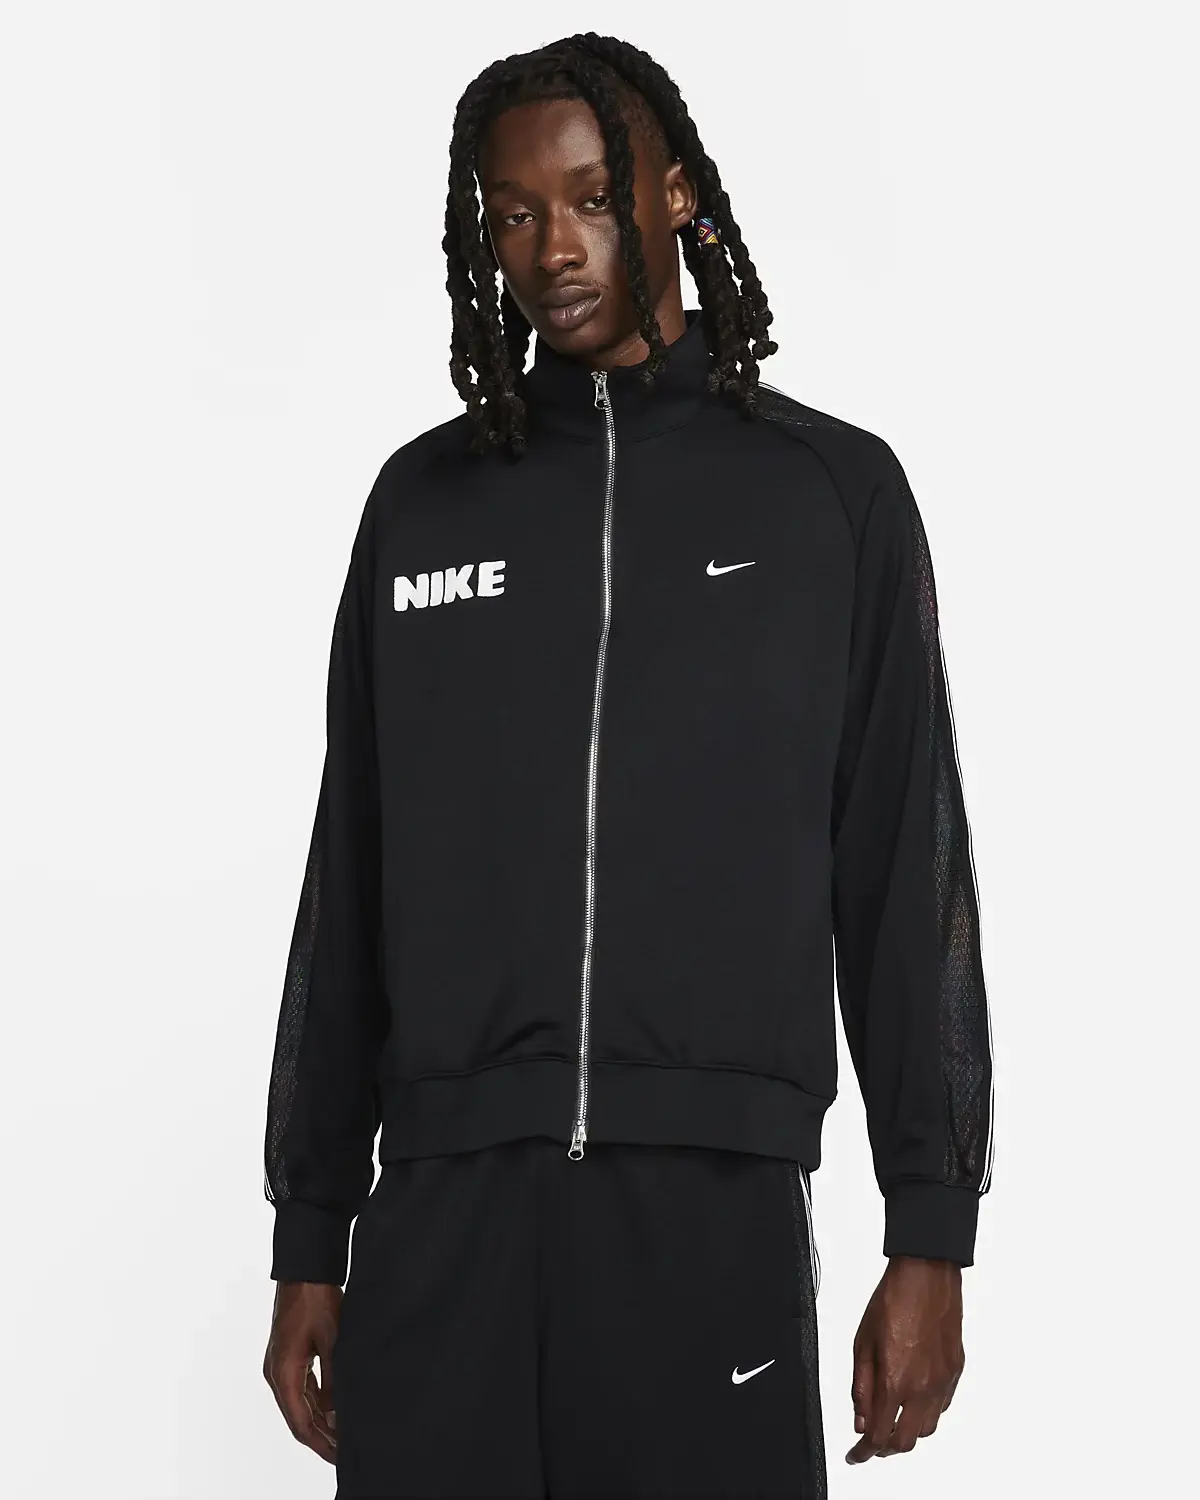 Nike Jackets. 1